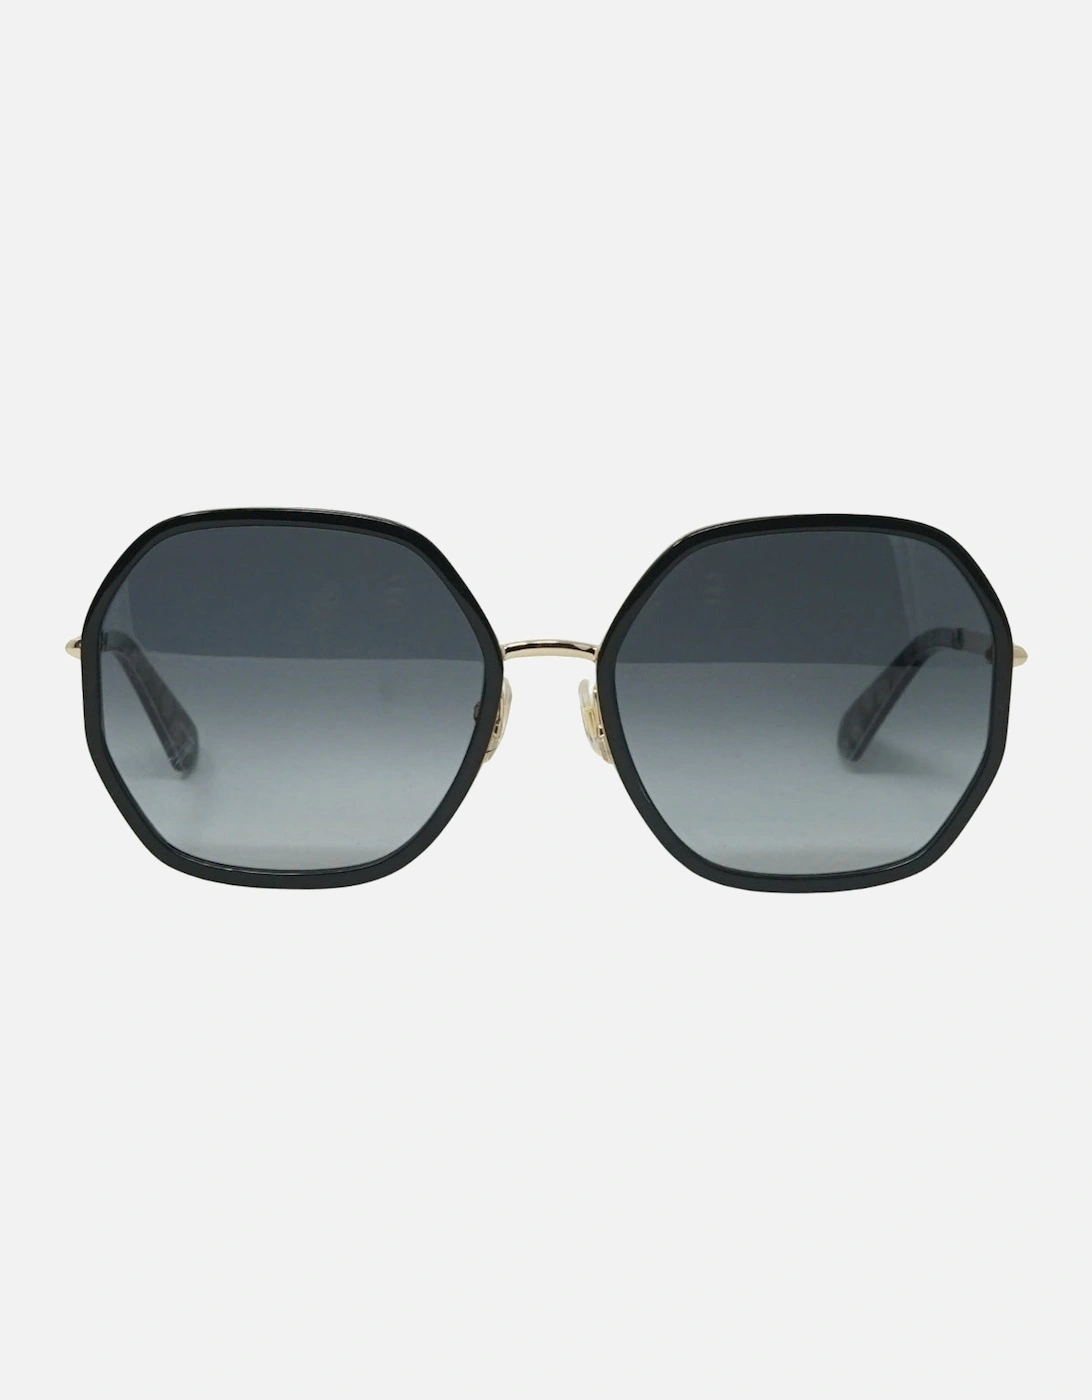 NICOLA/G/S RHL Black Gold Sunglasses, 4 of 3